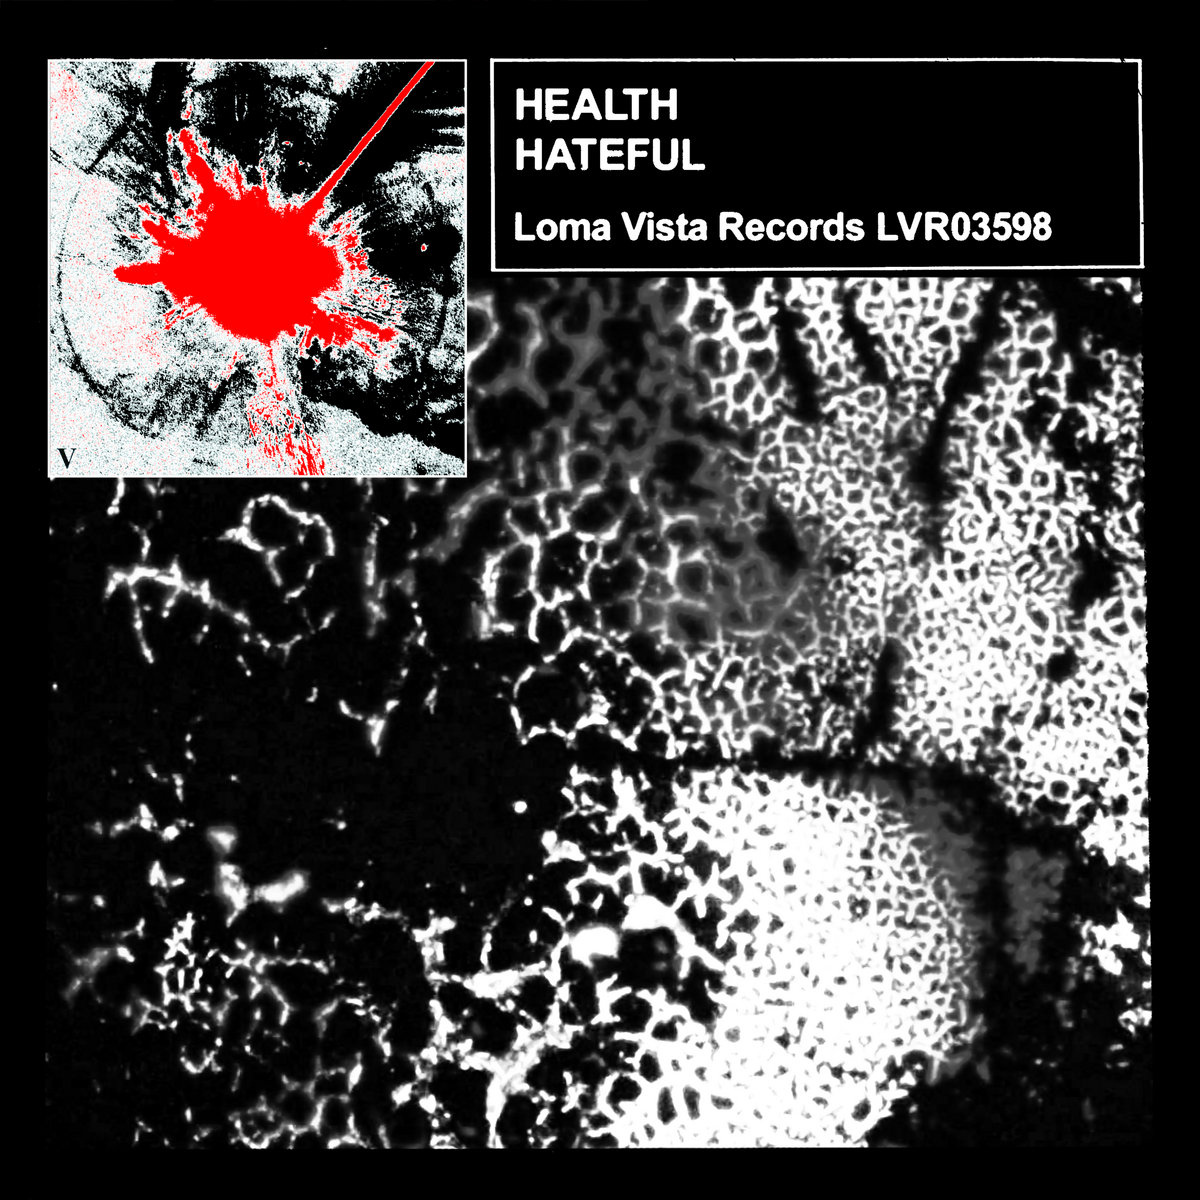 HEALTH ft. featuring SIERRA Hateful cover artwork